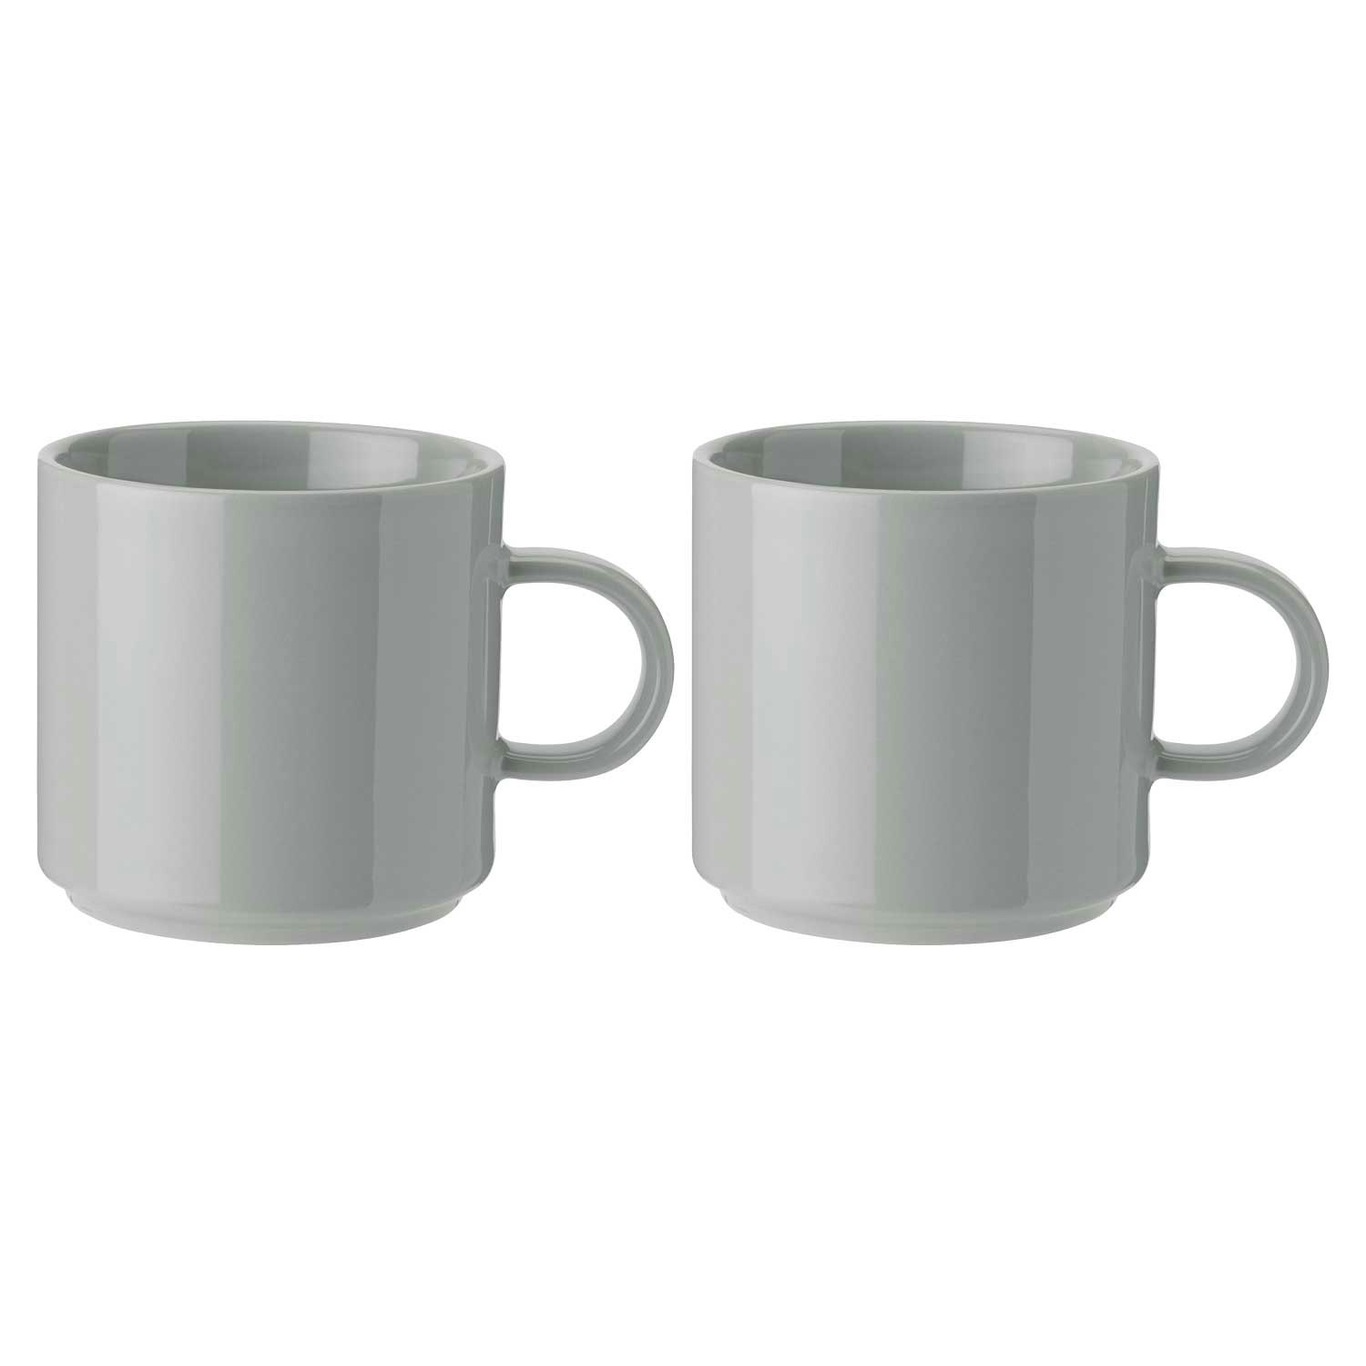 Stelton Mugs 2-pack, Light Grey